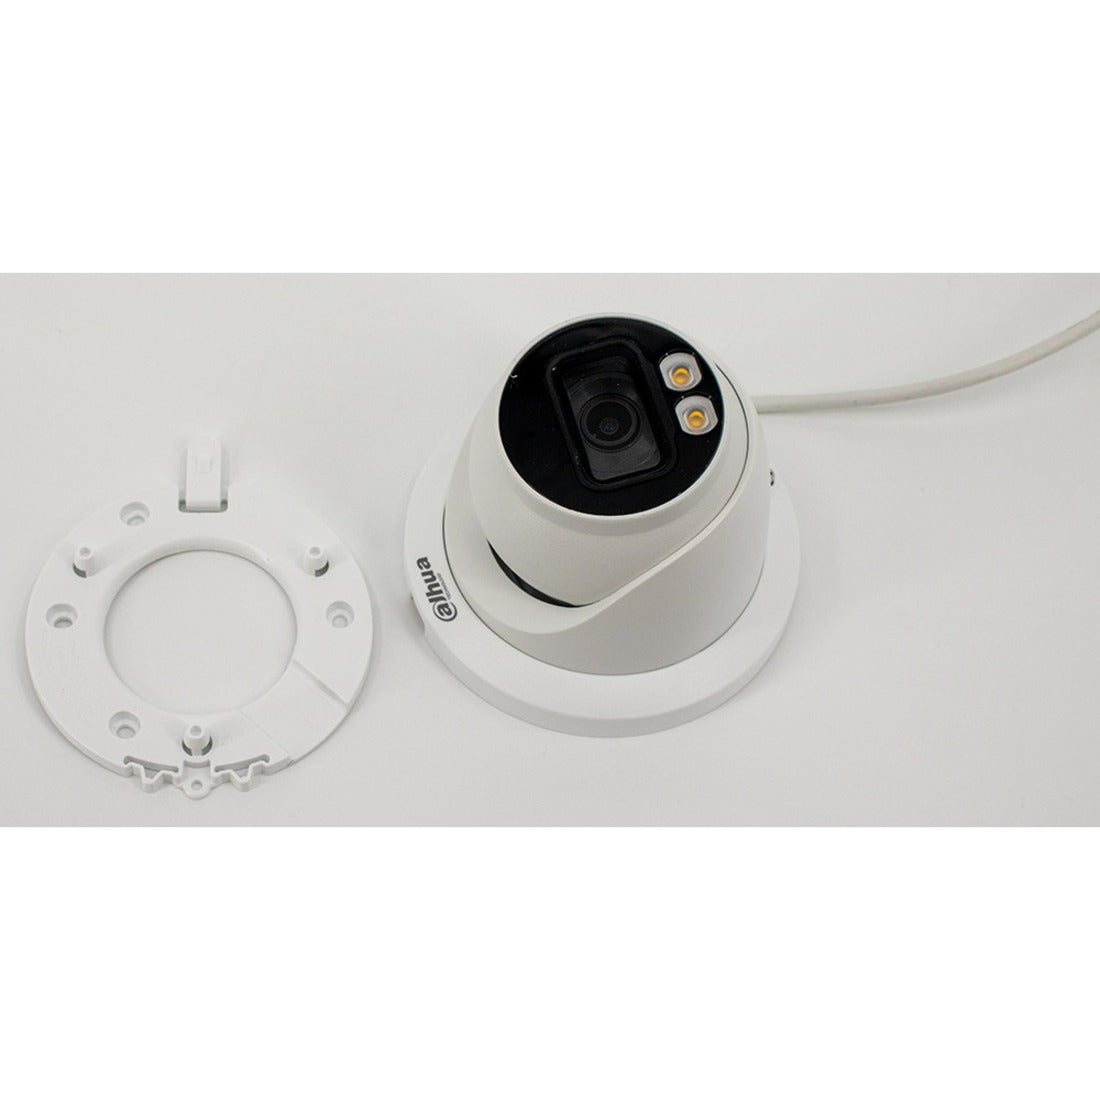 Dahua N43BJ62 4MP Night Color 2.0 Fixed-lens Network Eyeball Camera, Outdoor, IP67, 5 Year Warranty